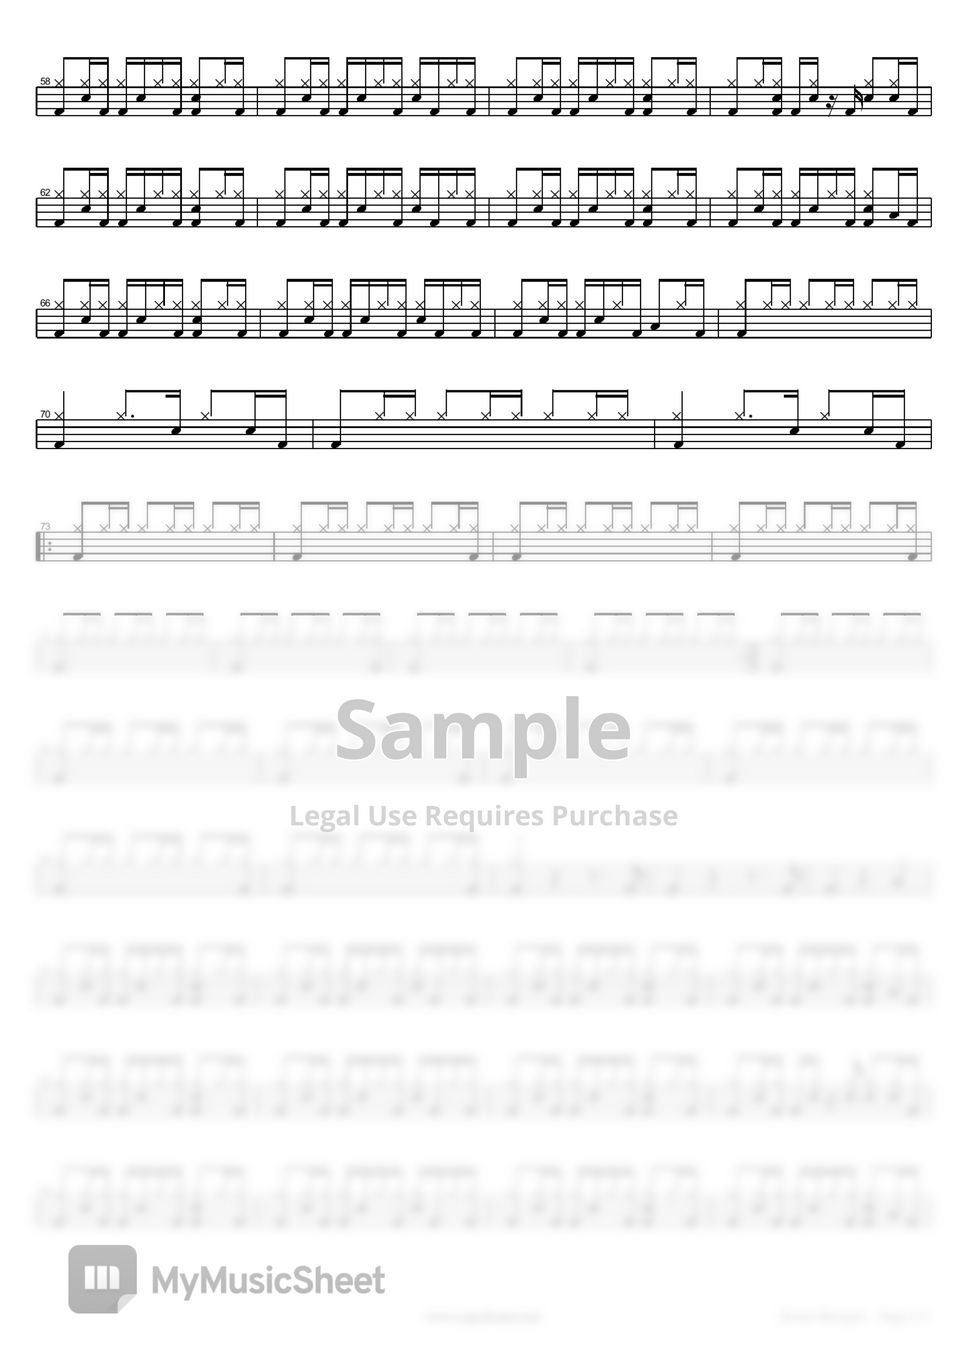 Dave Grusin - Bossa Baroque Sheet by COPYDRUM